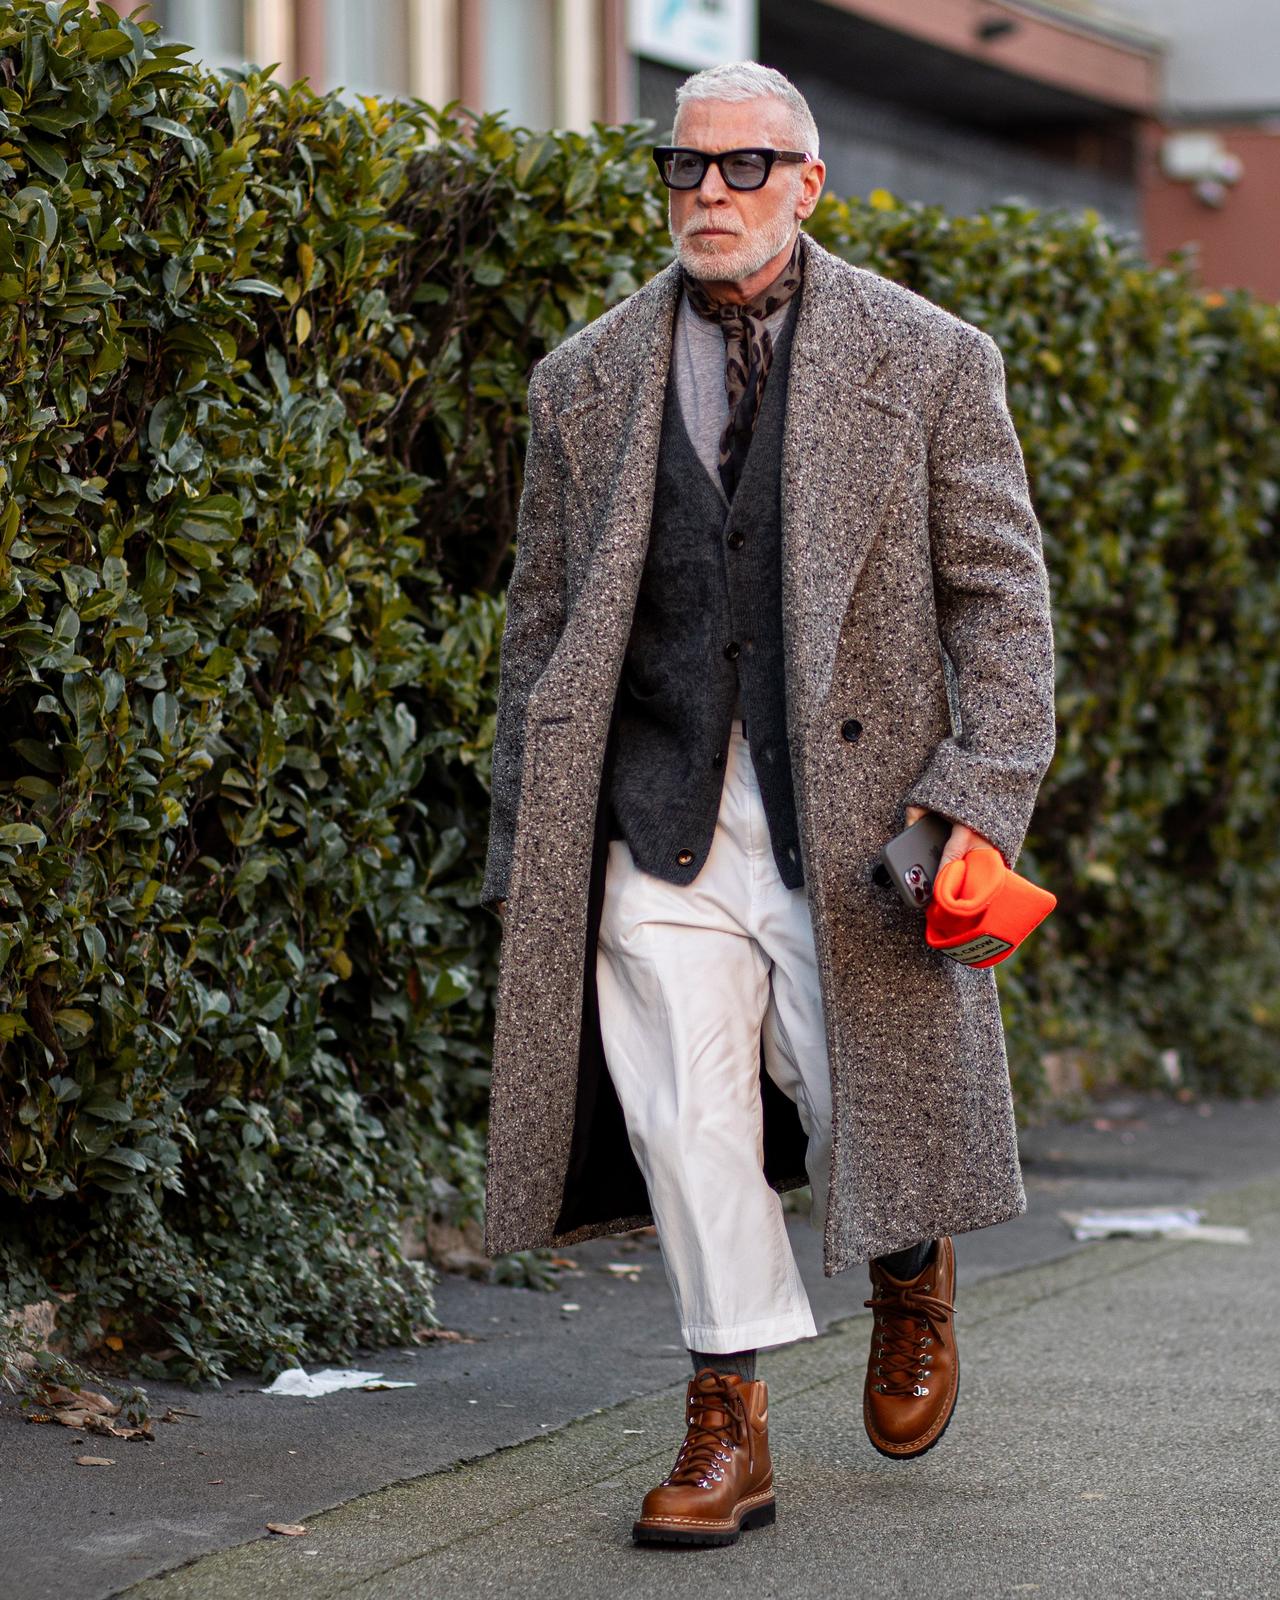 A man in a coat and tie walking down a sidewalk